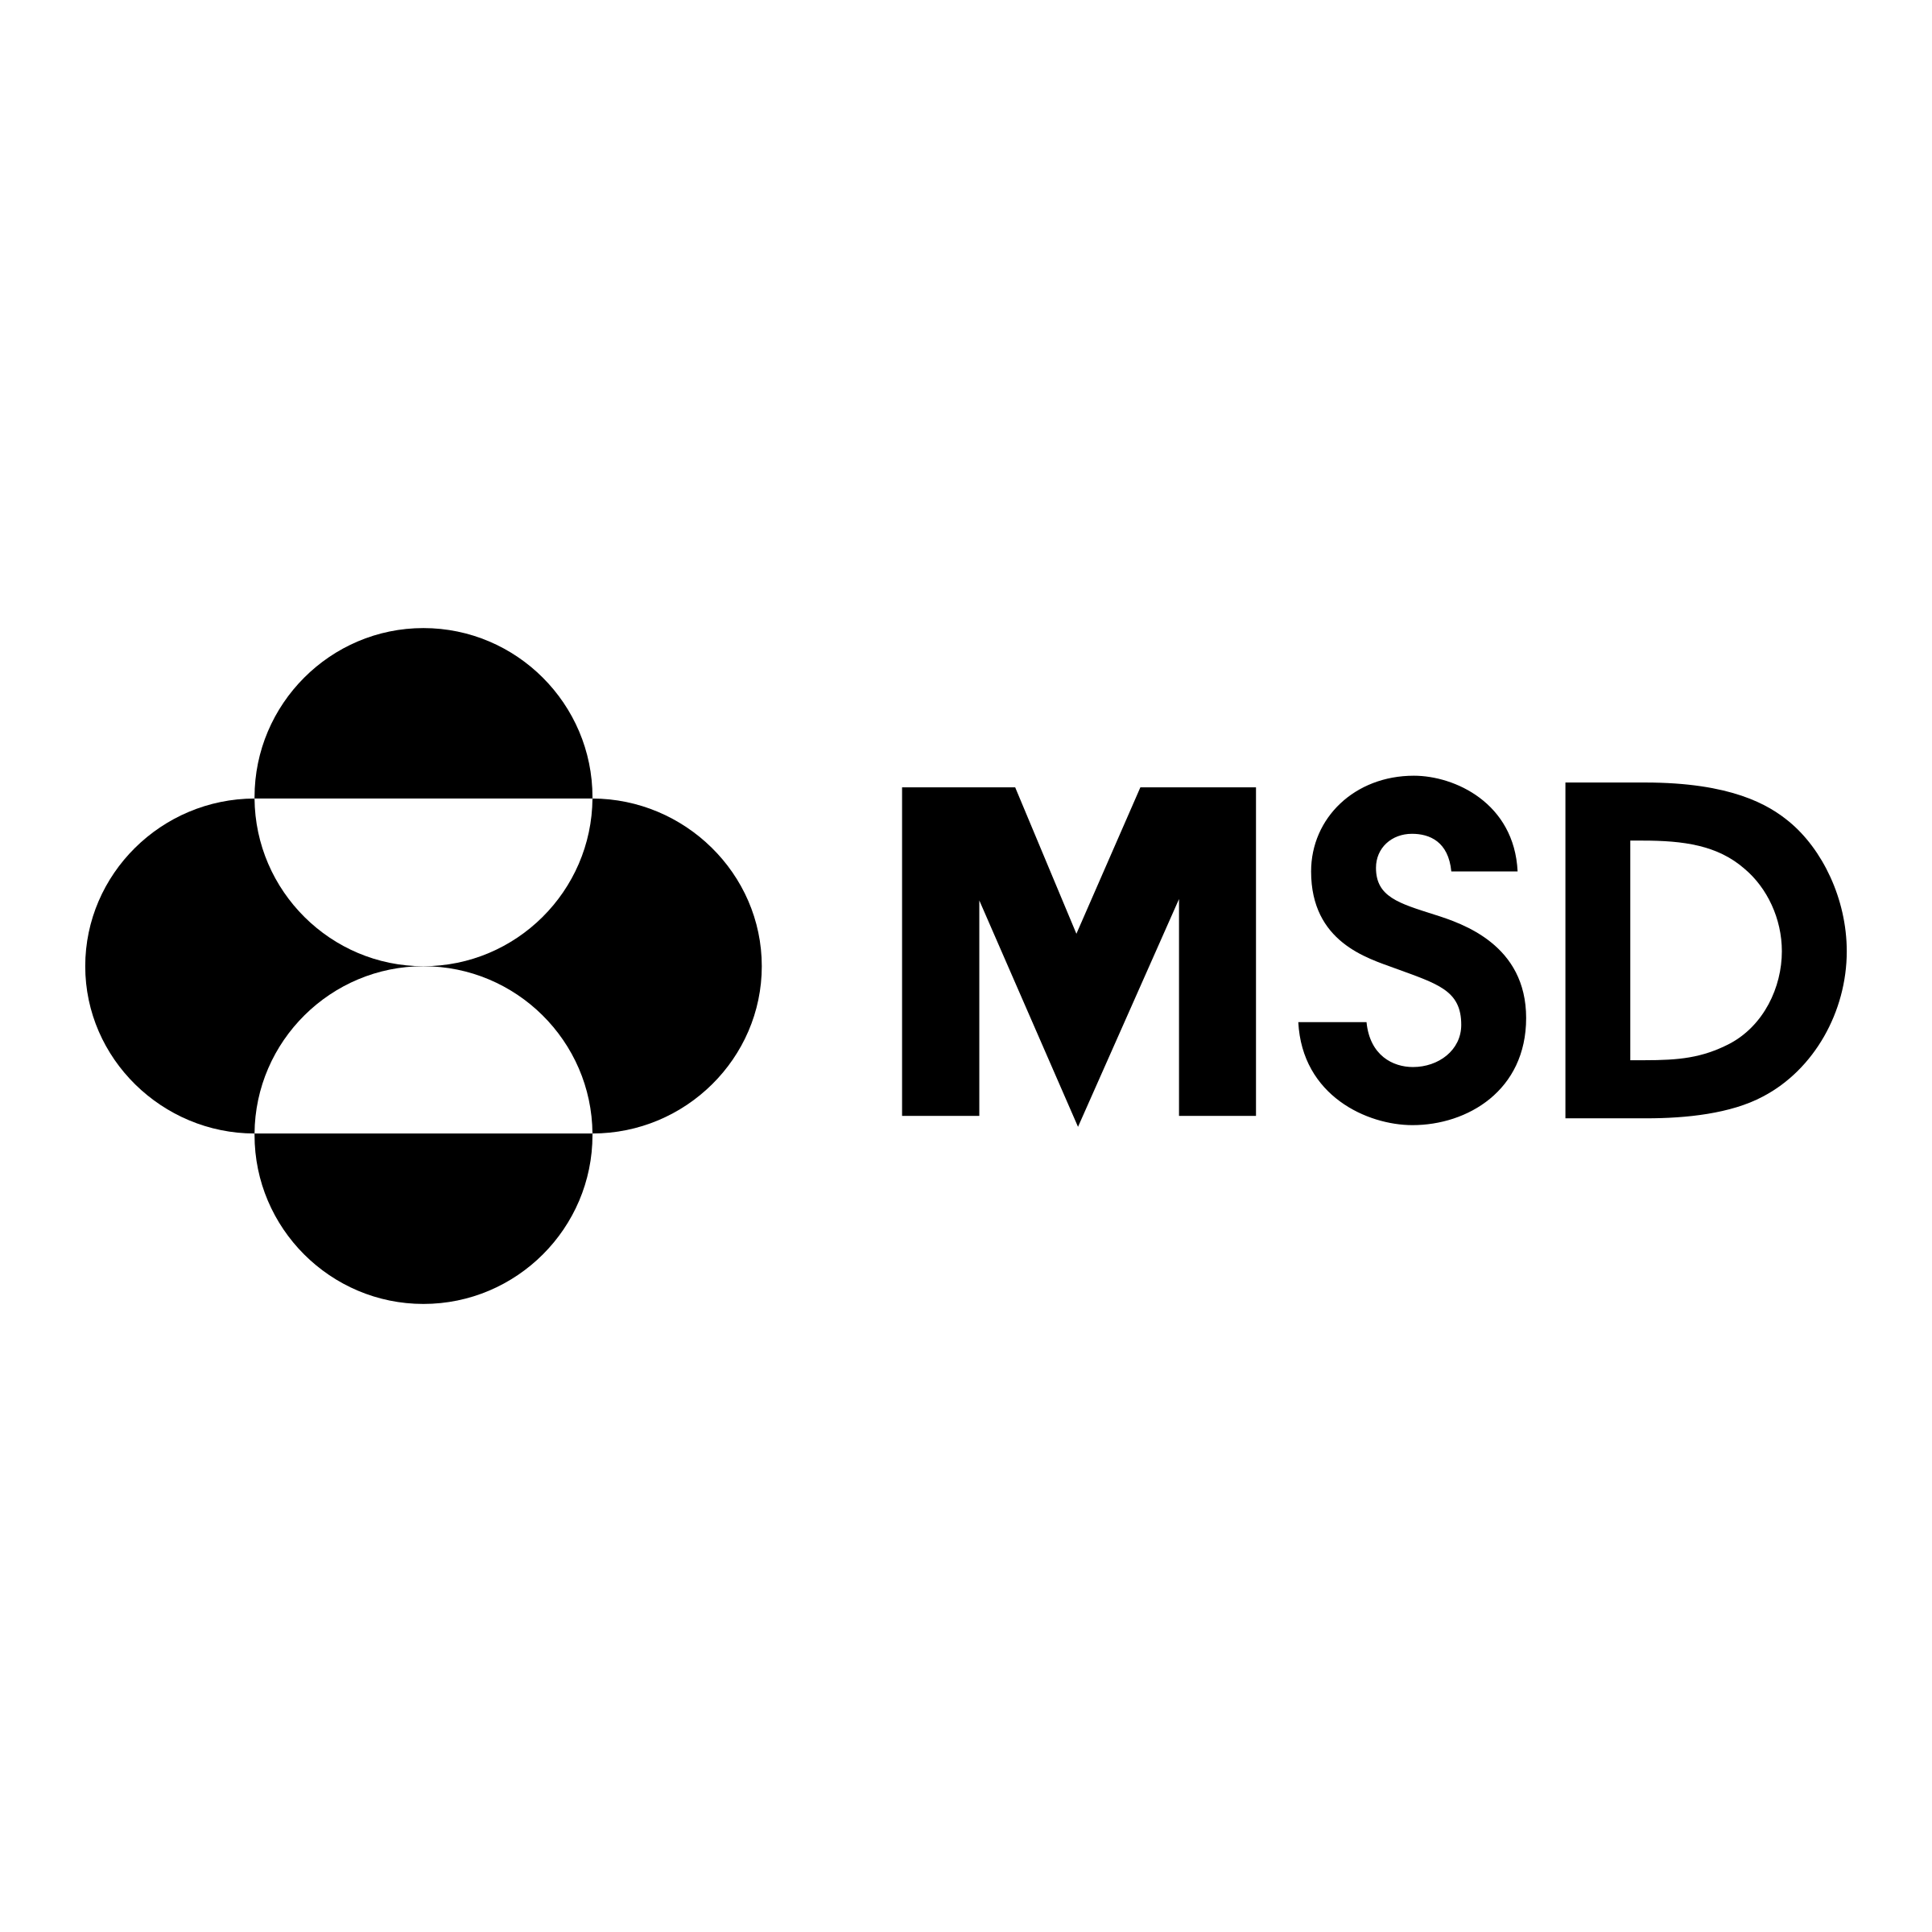 logo msd black